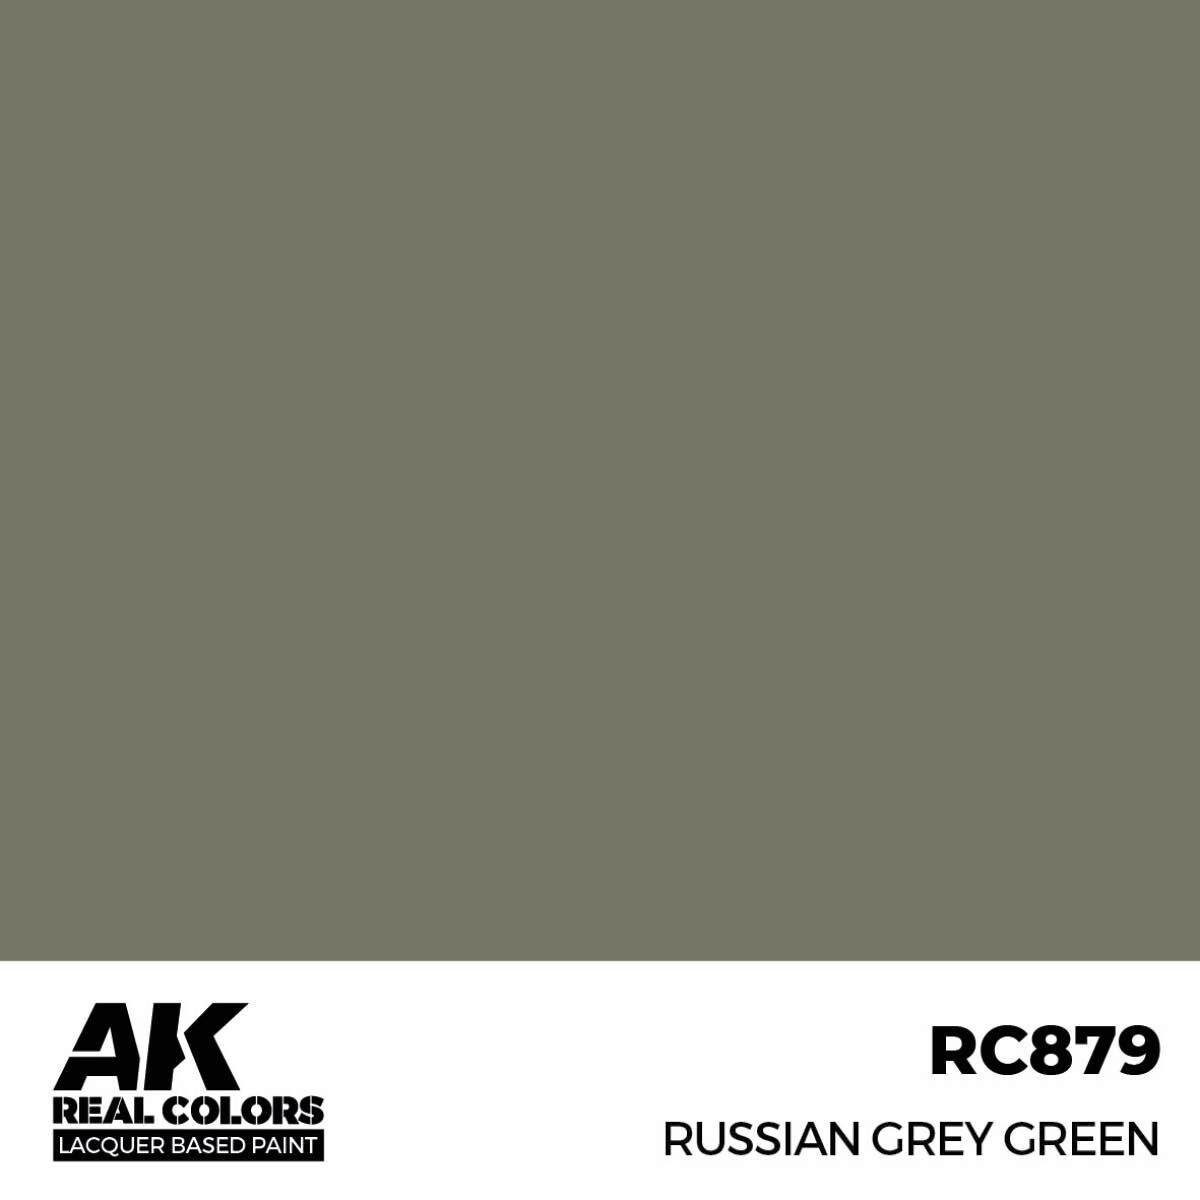 AK RC879 Real Colors Russian Grey Green 17 ml.